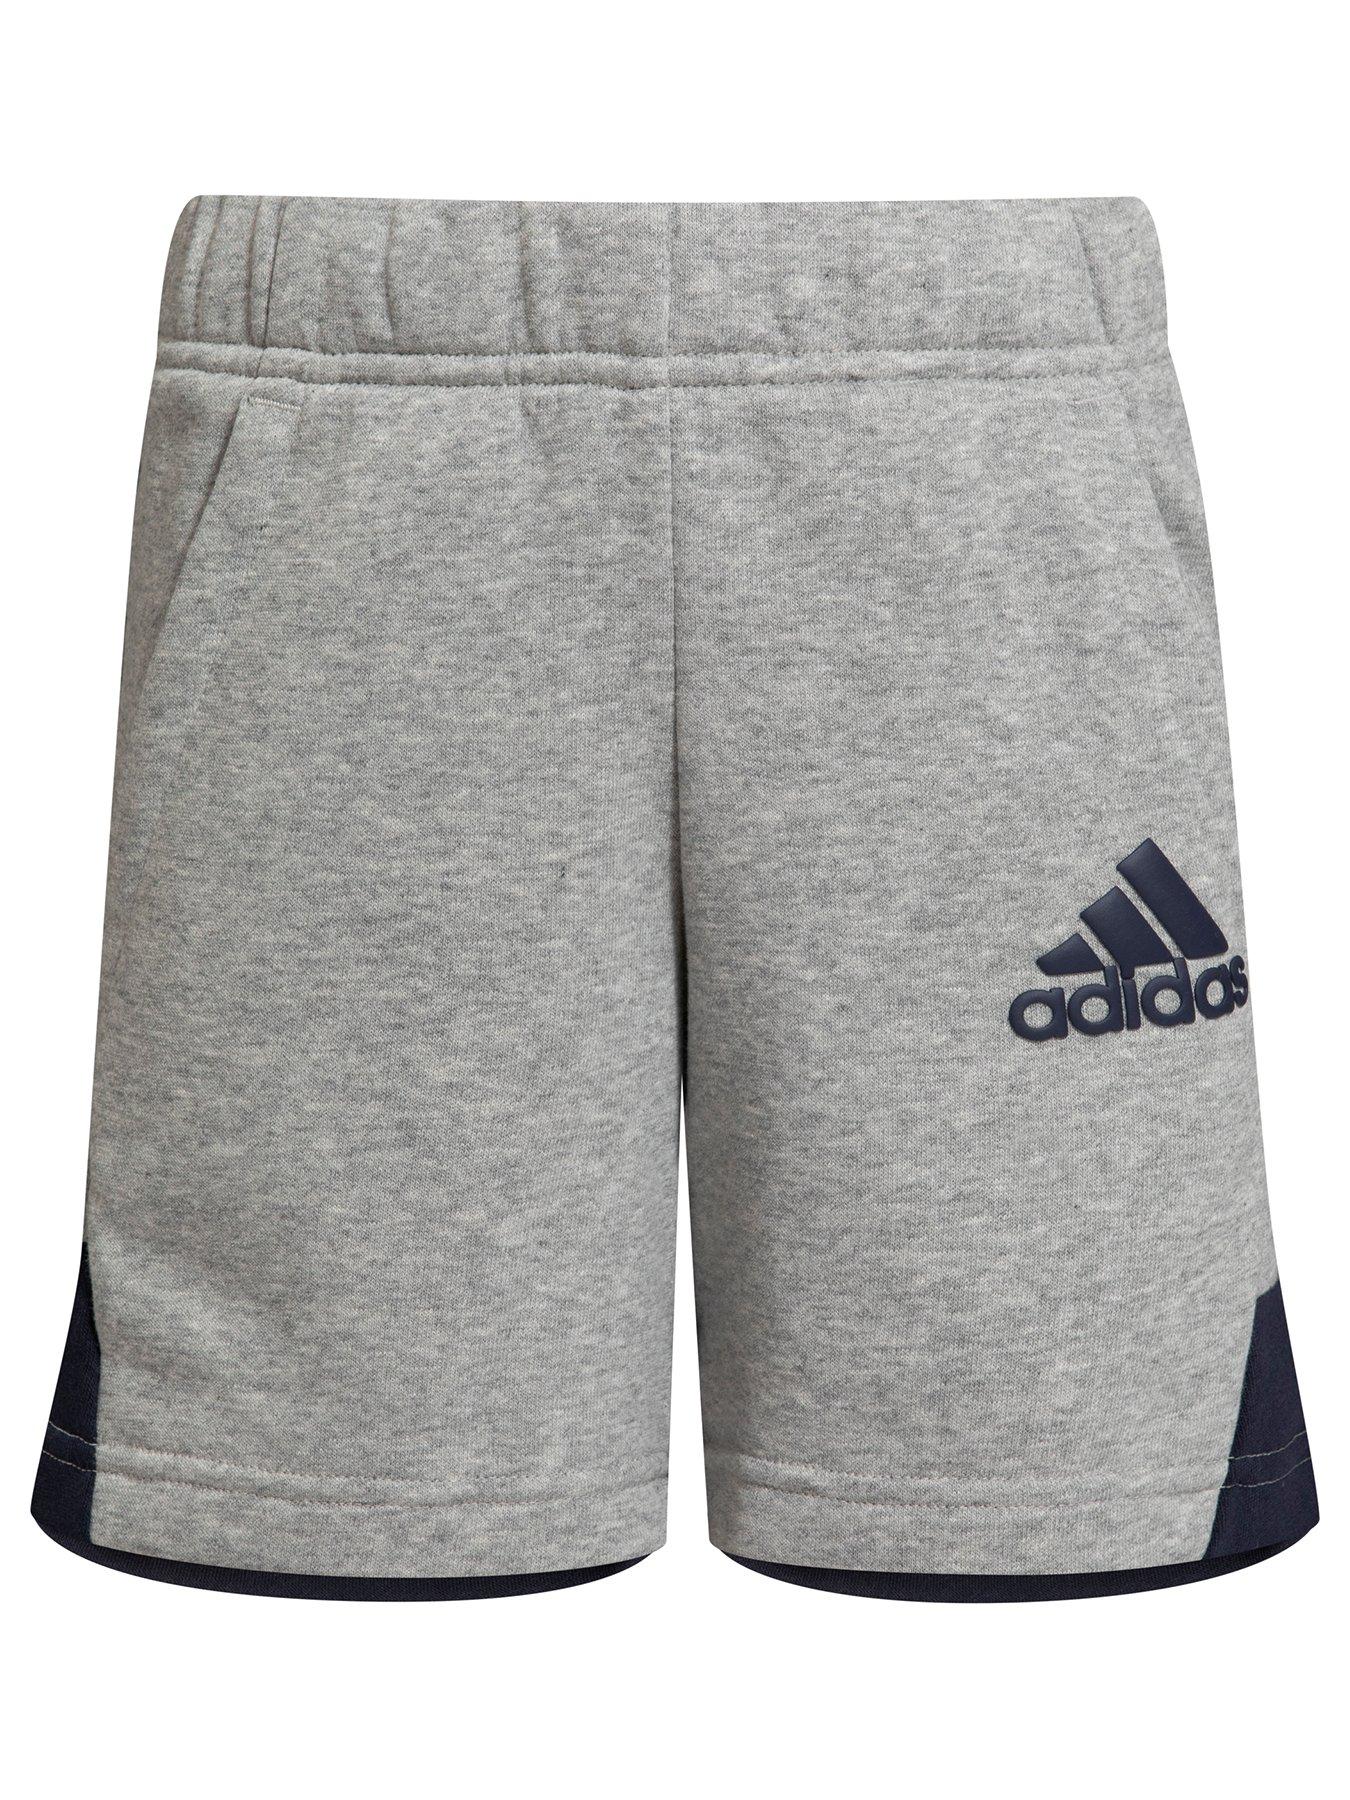 adidas Junior Boys Badge Of Sport Shorts - Grey/Navy | very.co.uk